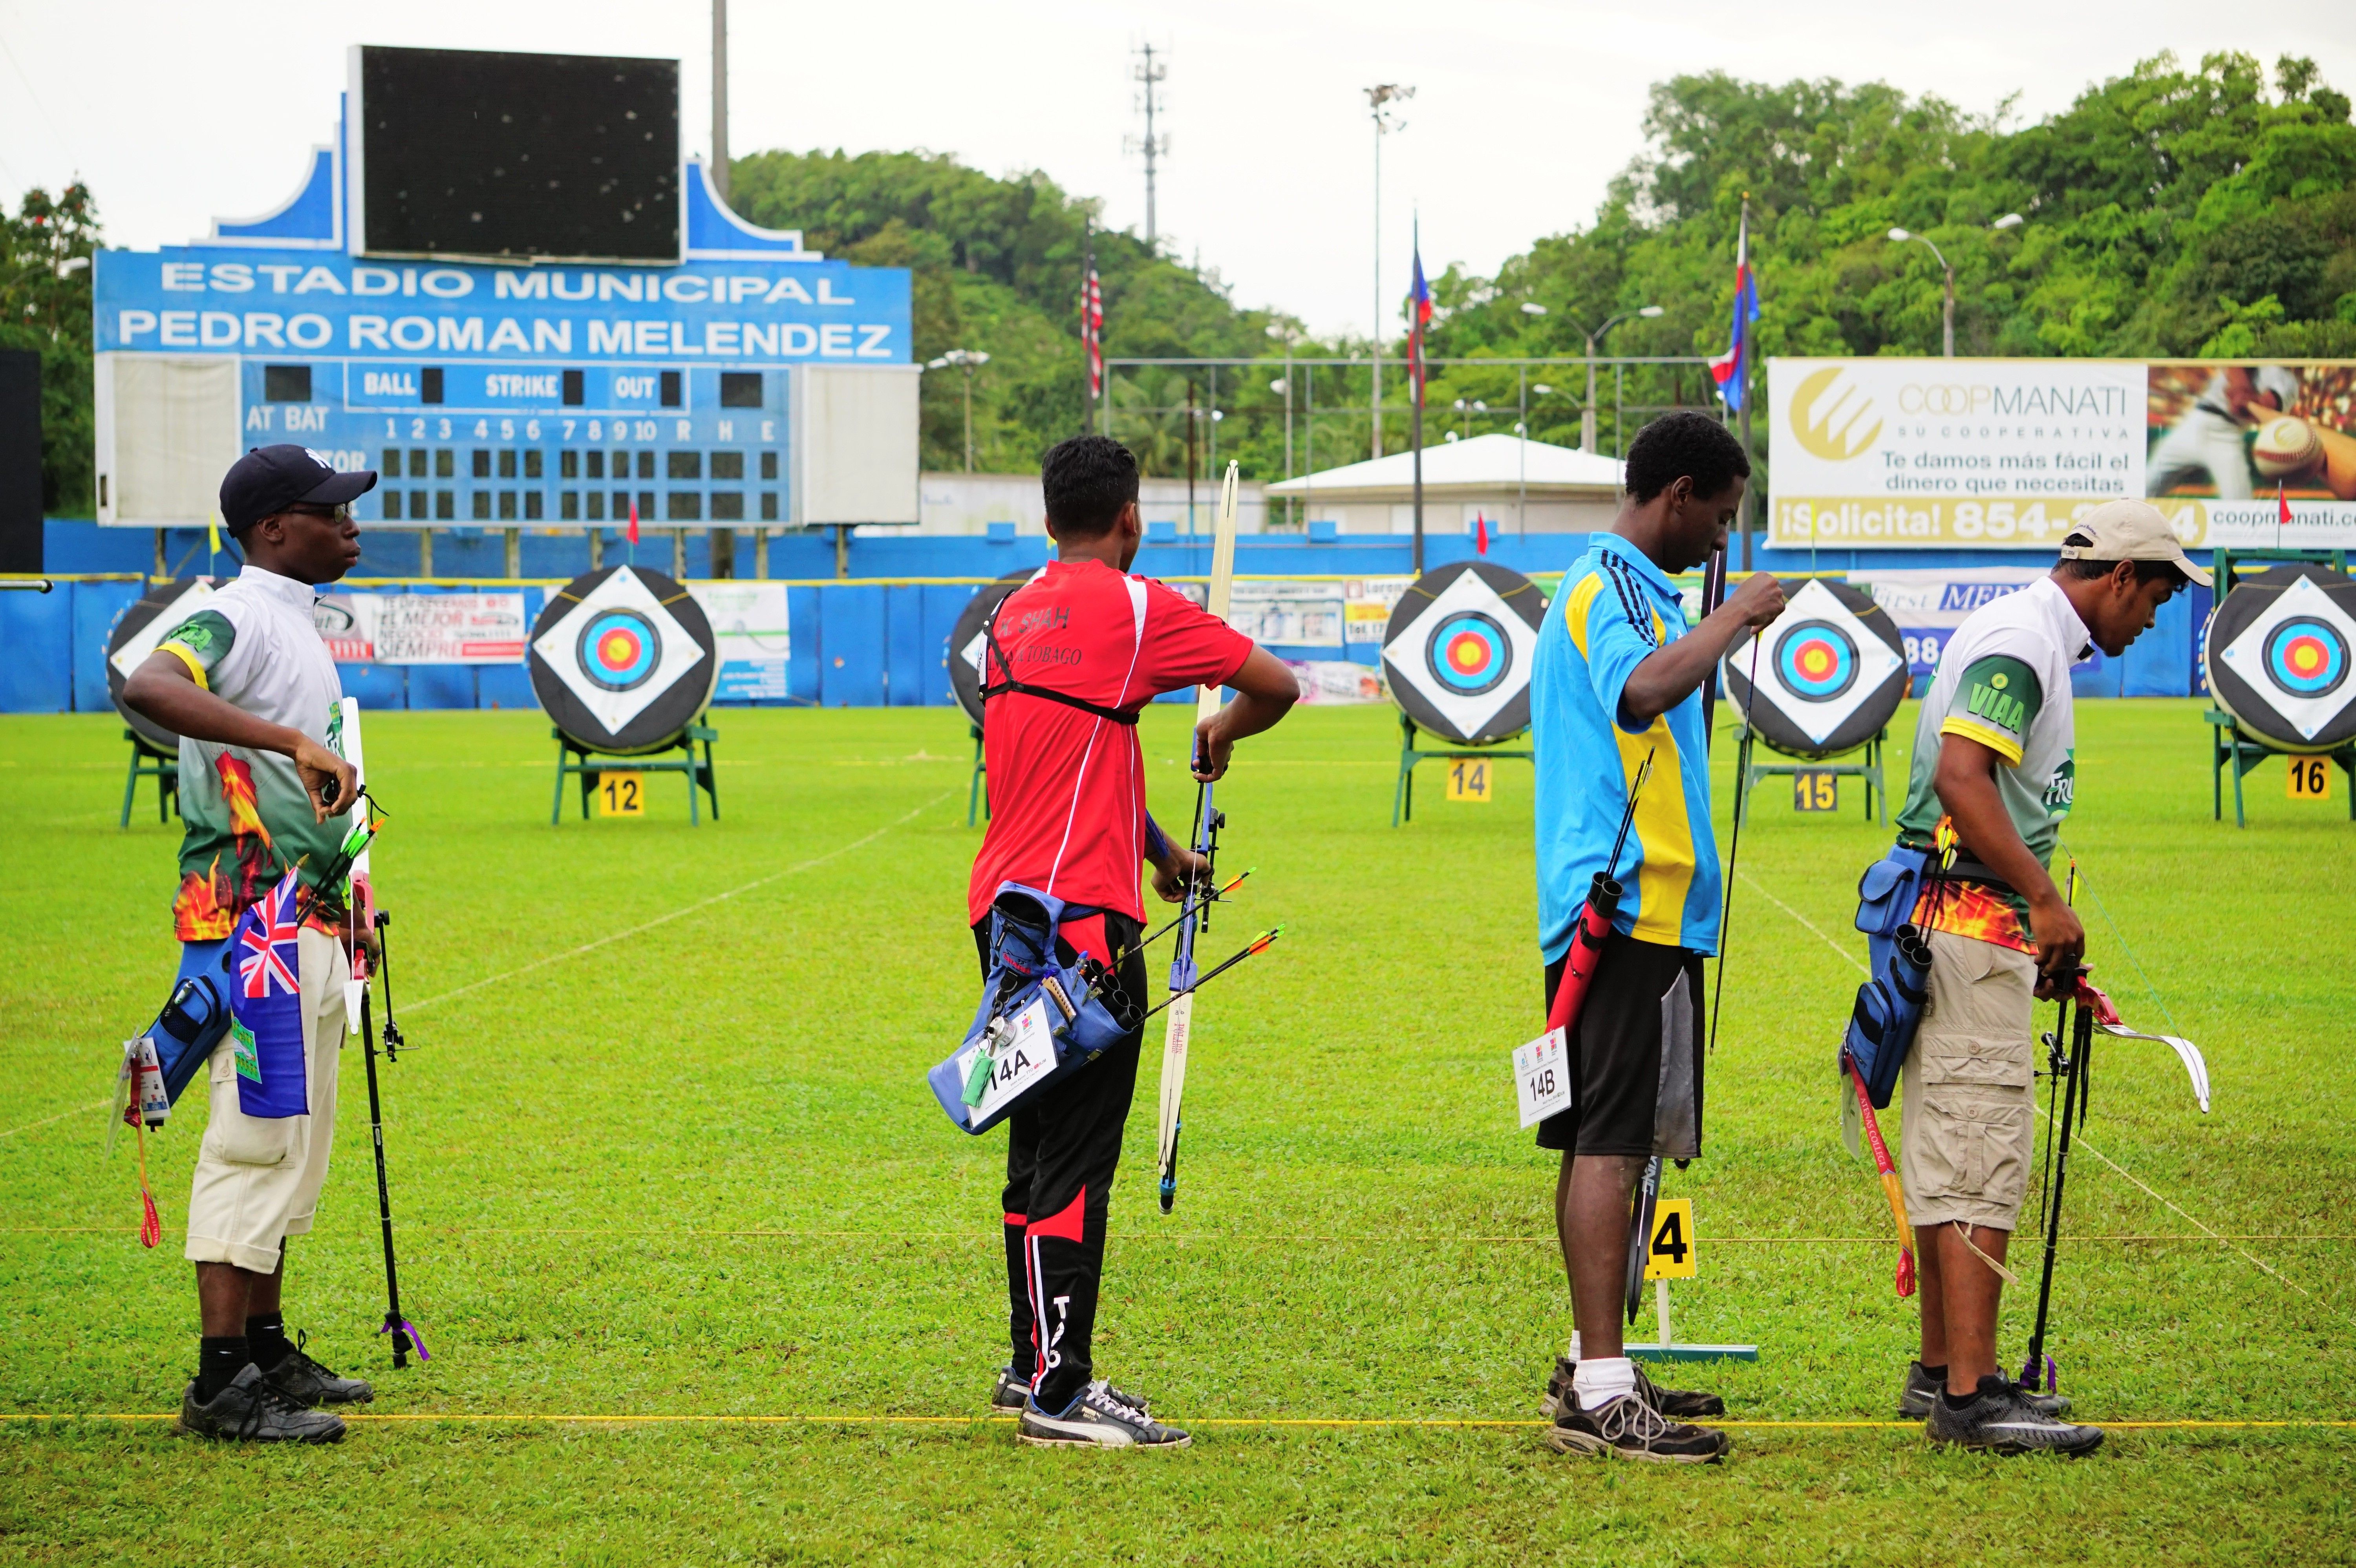 44 contest 1st Caribbean Development Championships | World Archery